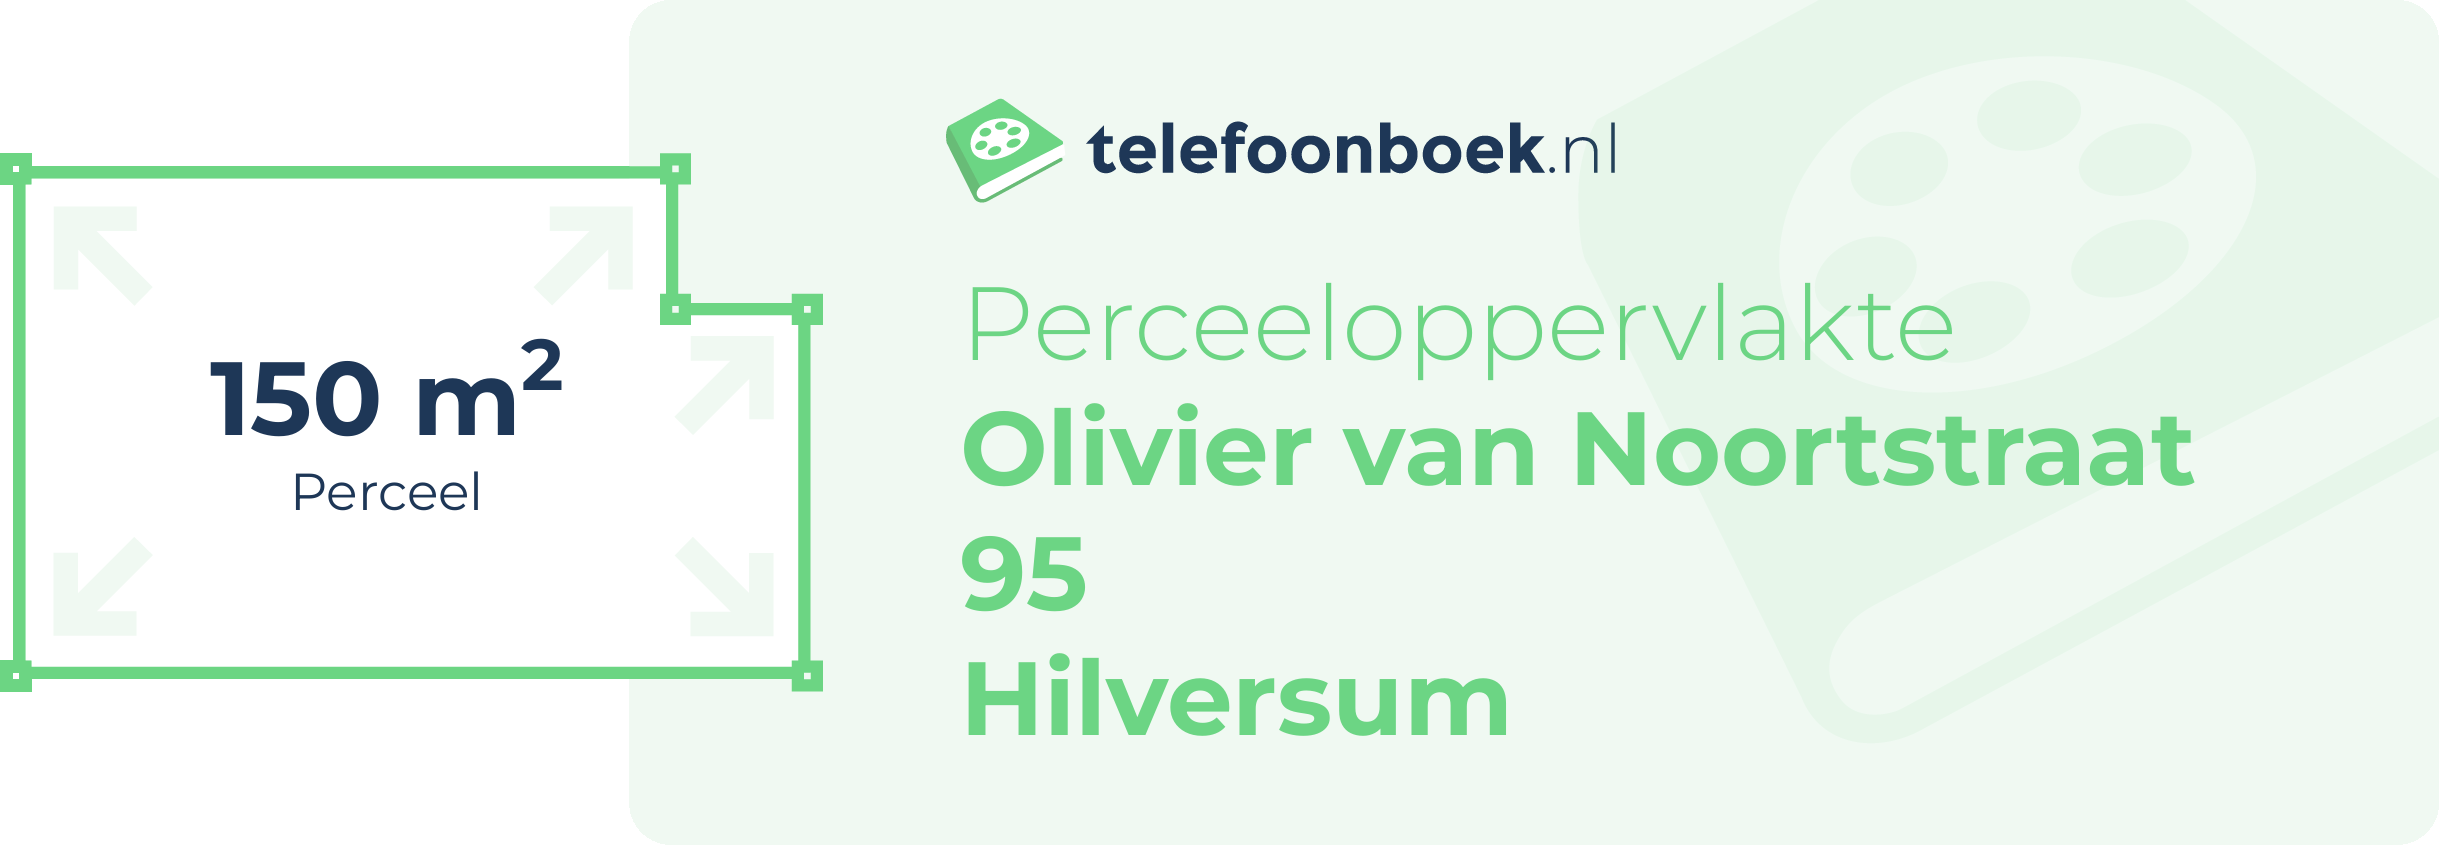 Perceeloppervlakte Olivier Van Noortstraat 95 Hilversum